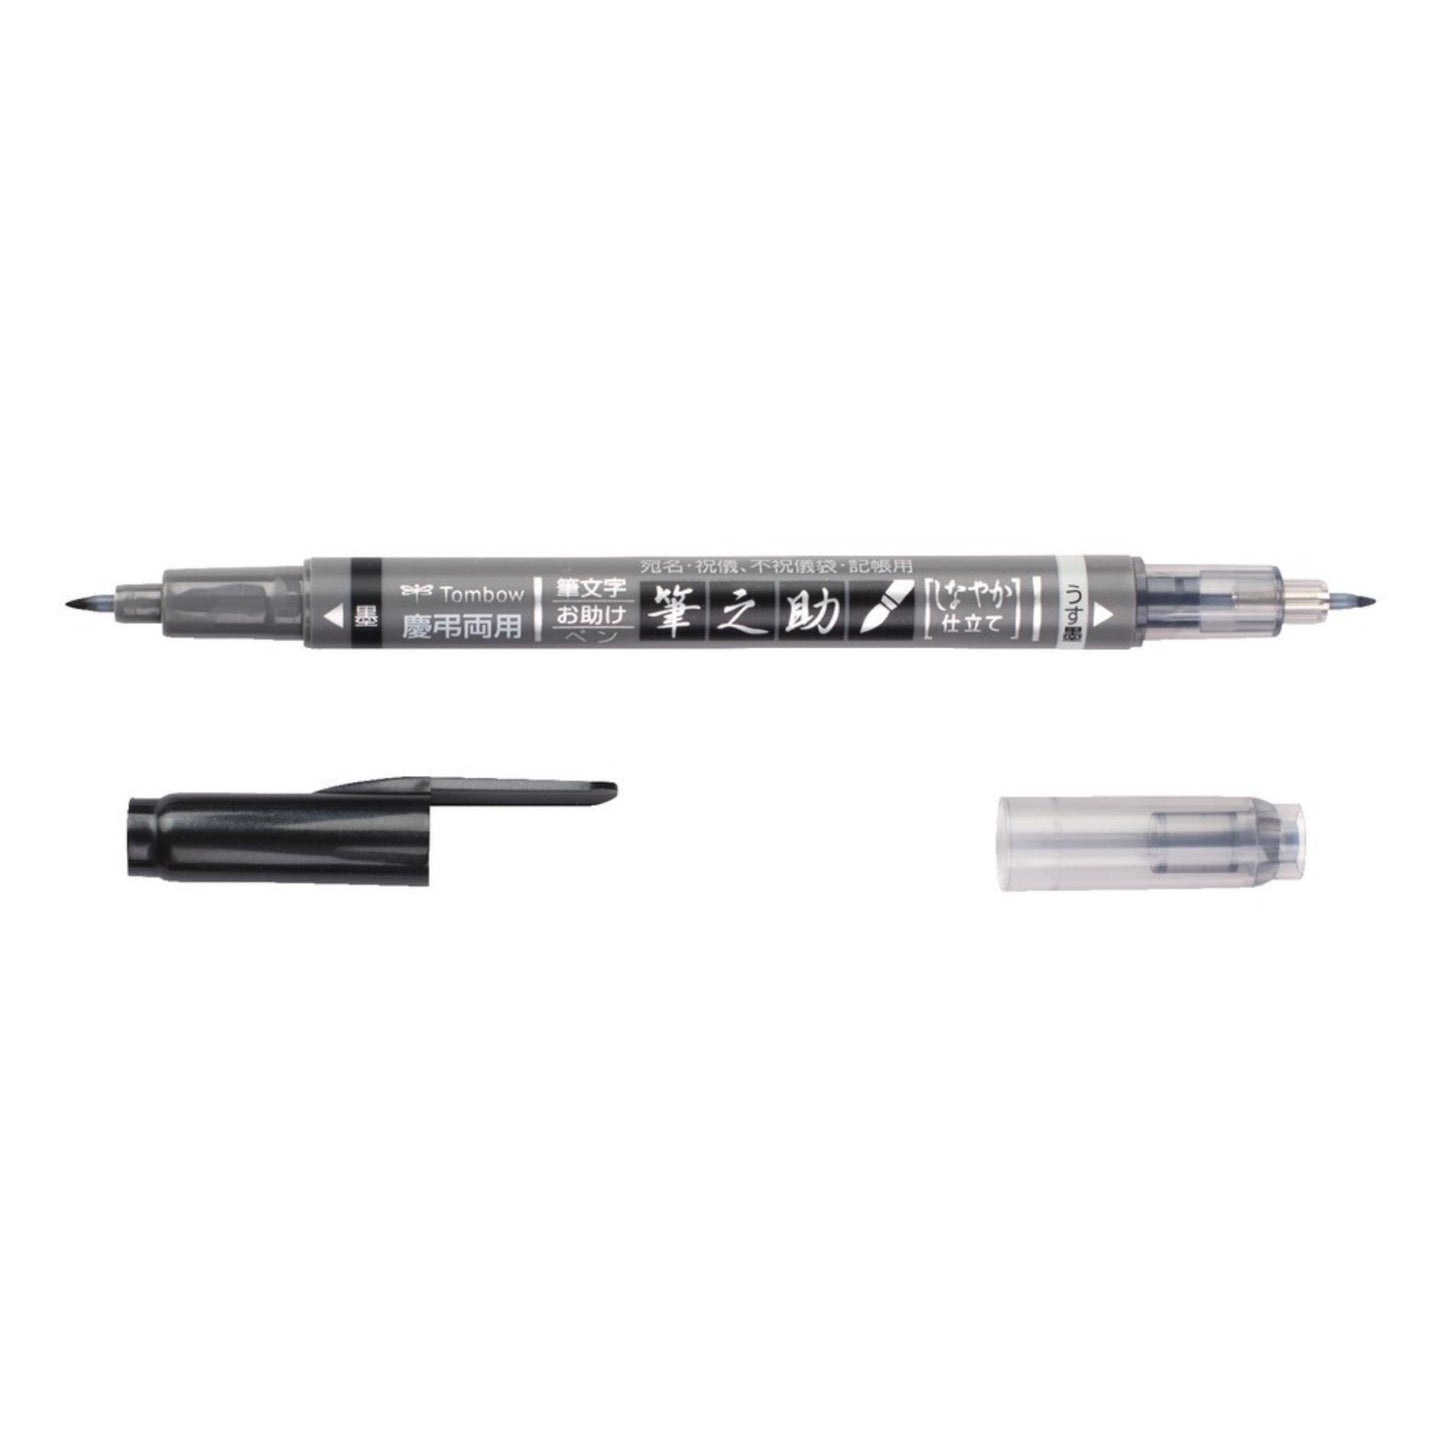 Tombow - Fudenosuke TWIN Brush Pen - schwarz / grau